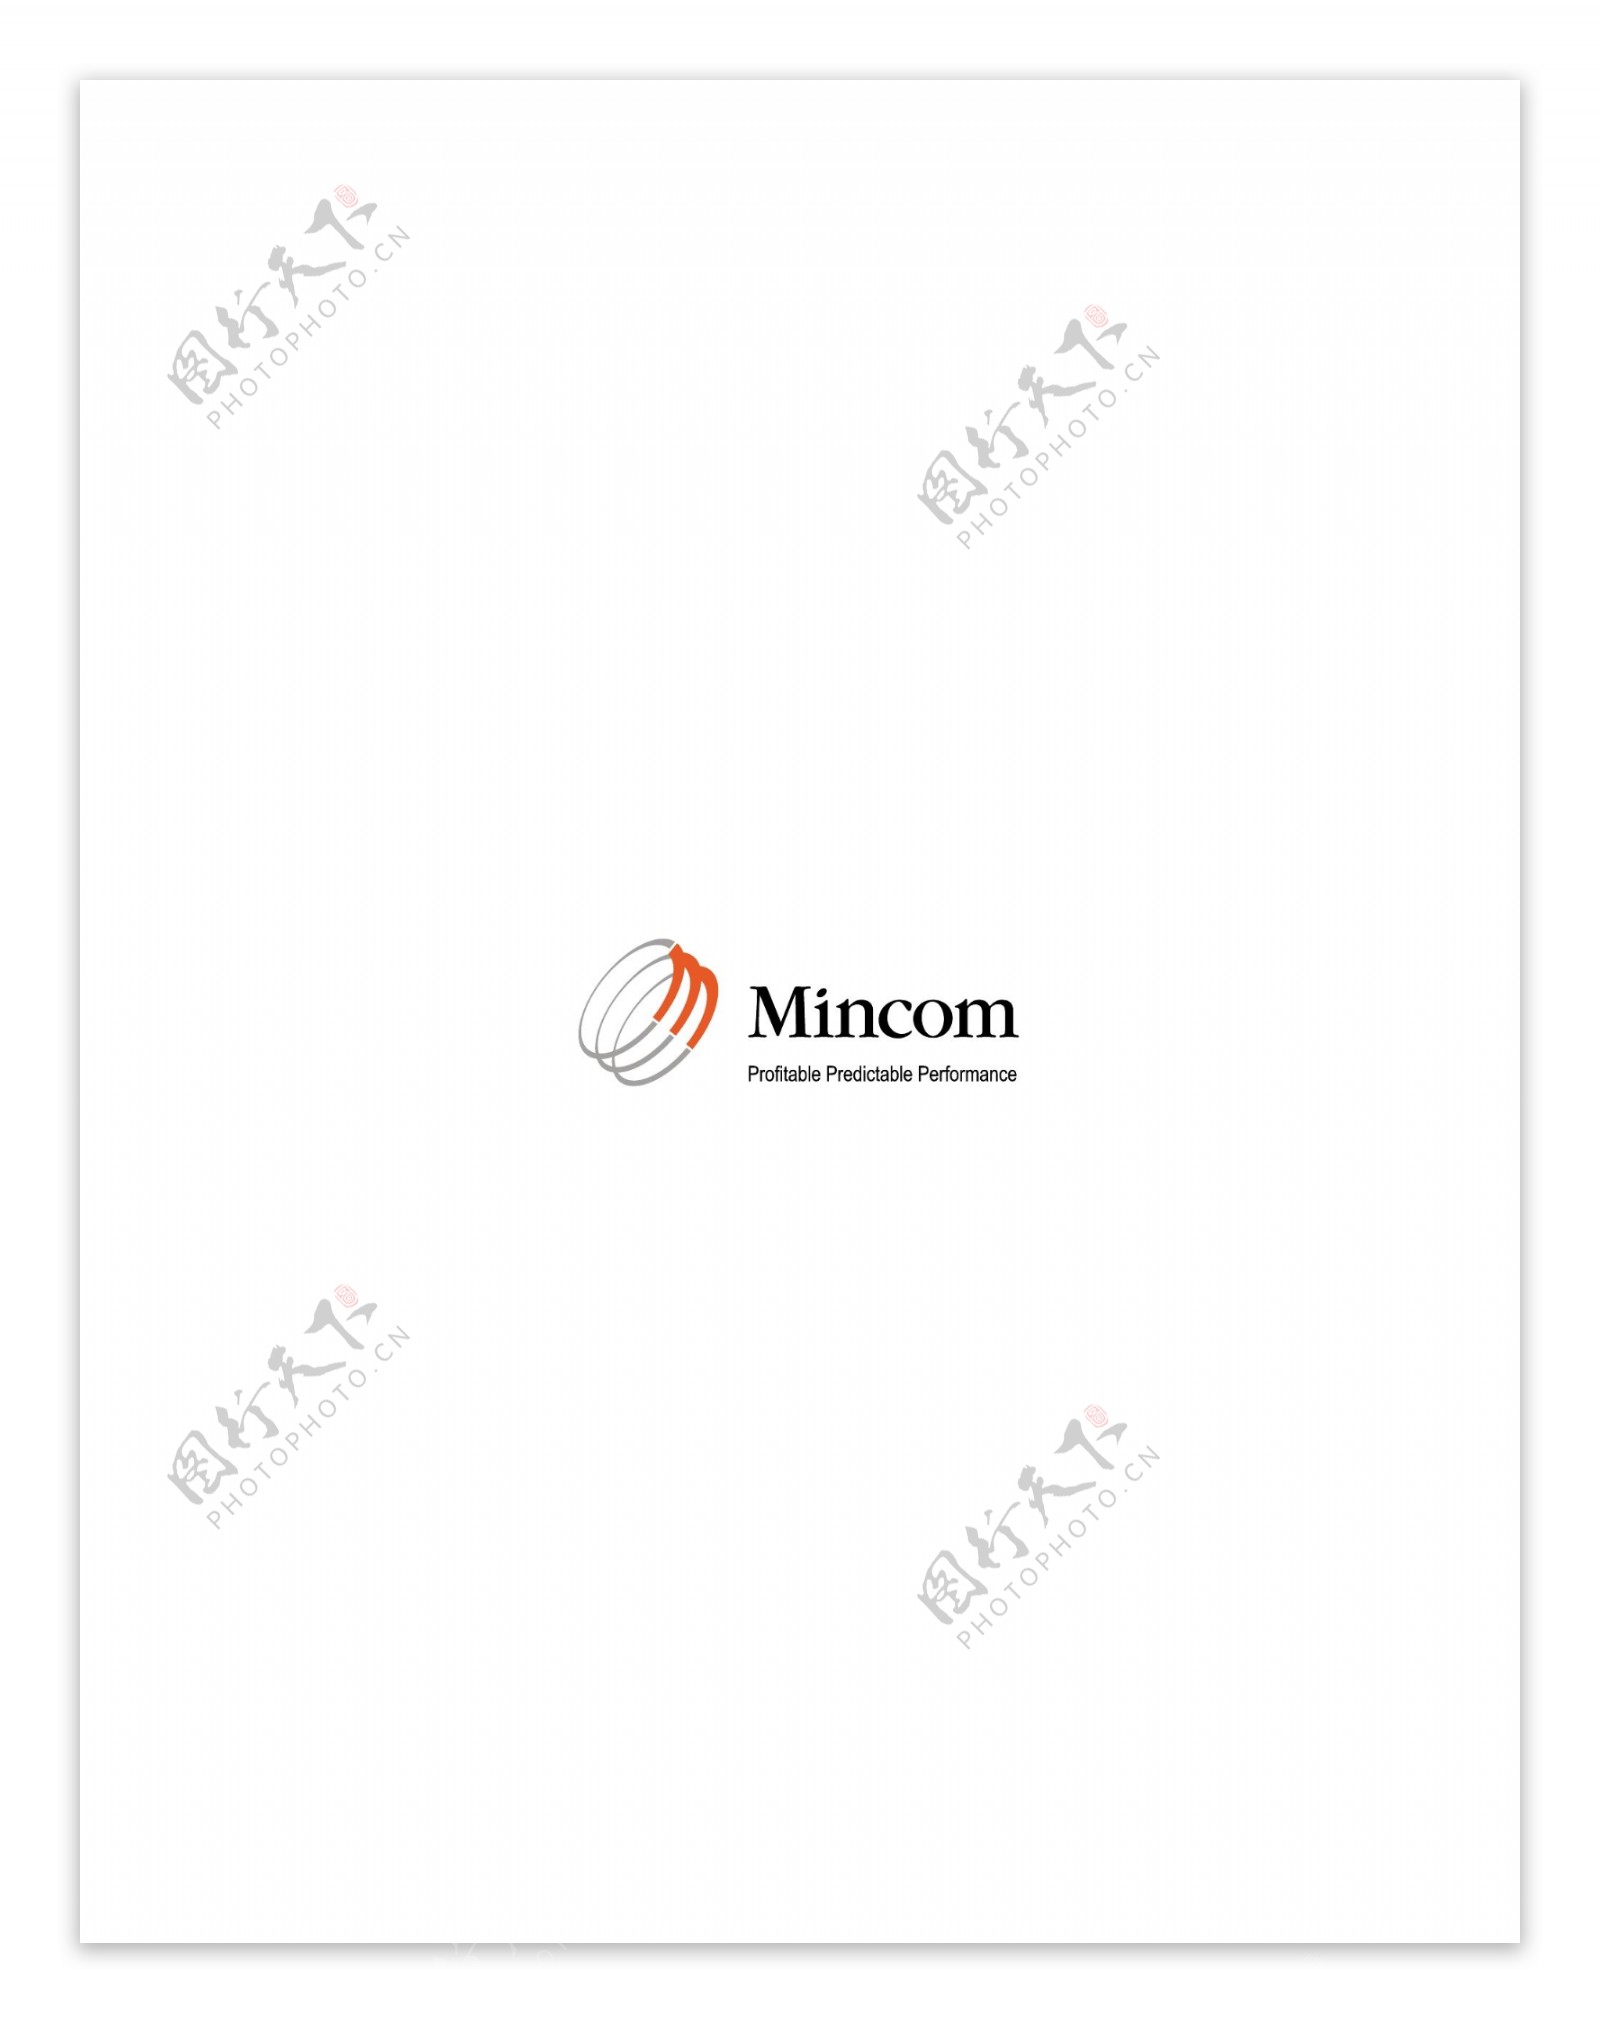 Mincomlogo设计欣赏IT公司标志案例Mincom下载标志设计欣赏